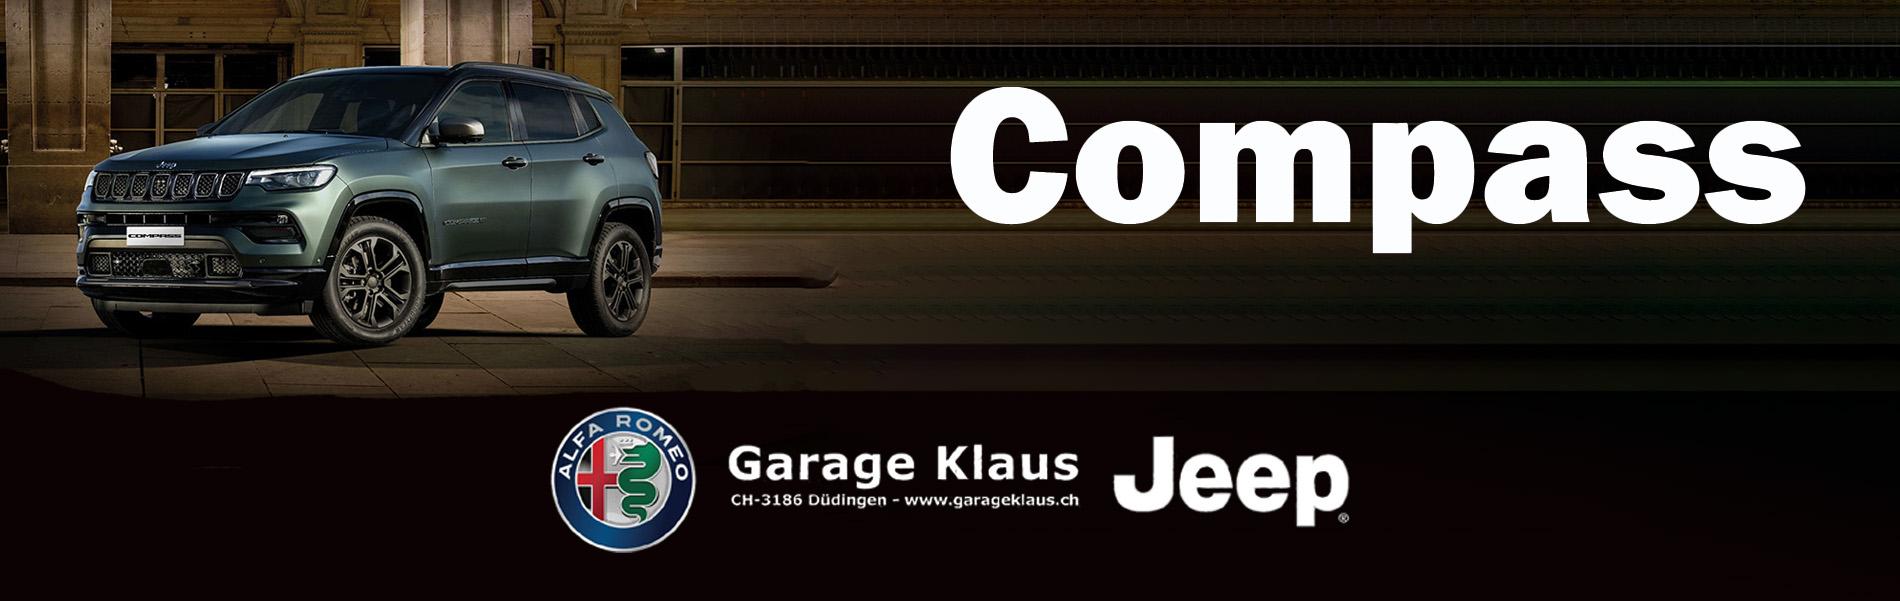 jeepcompass